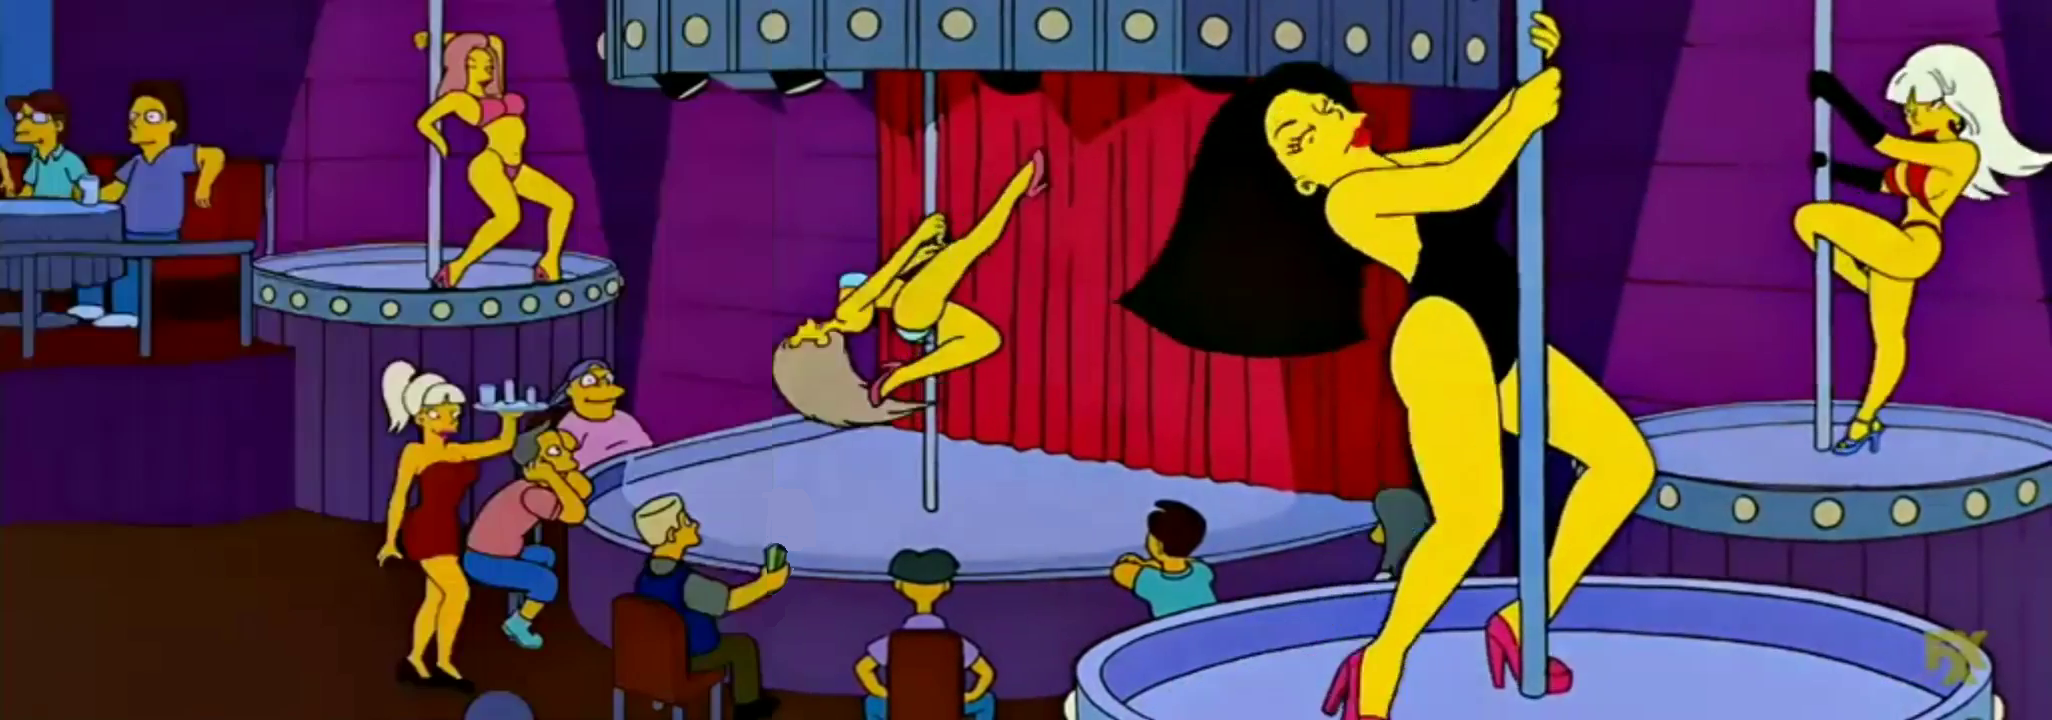 Simpsons strip club